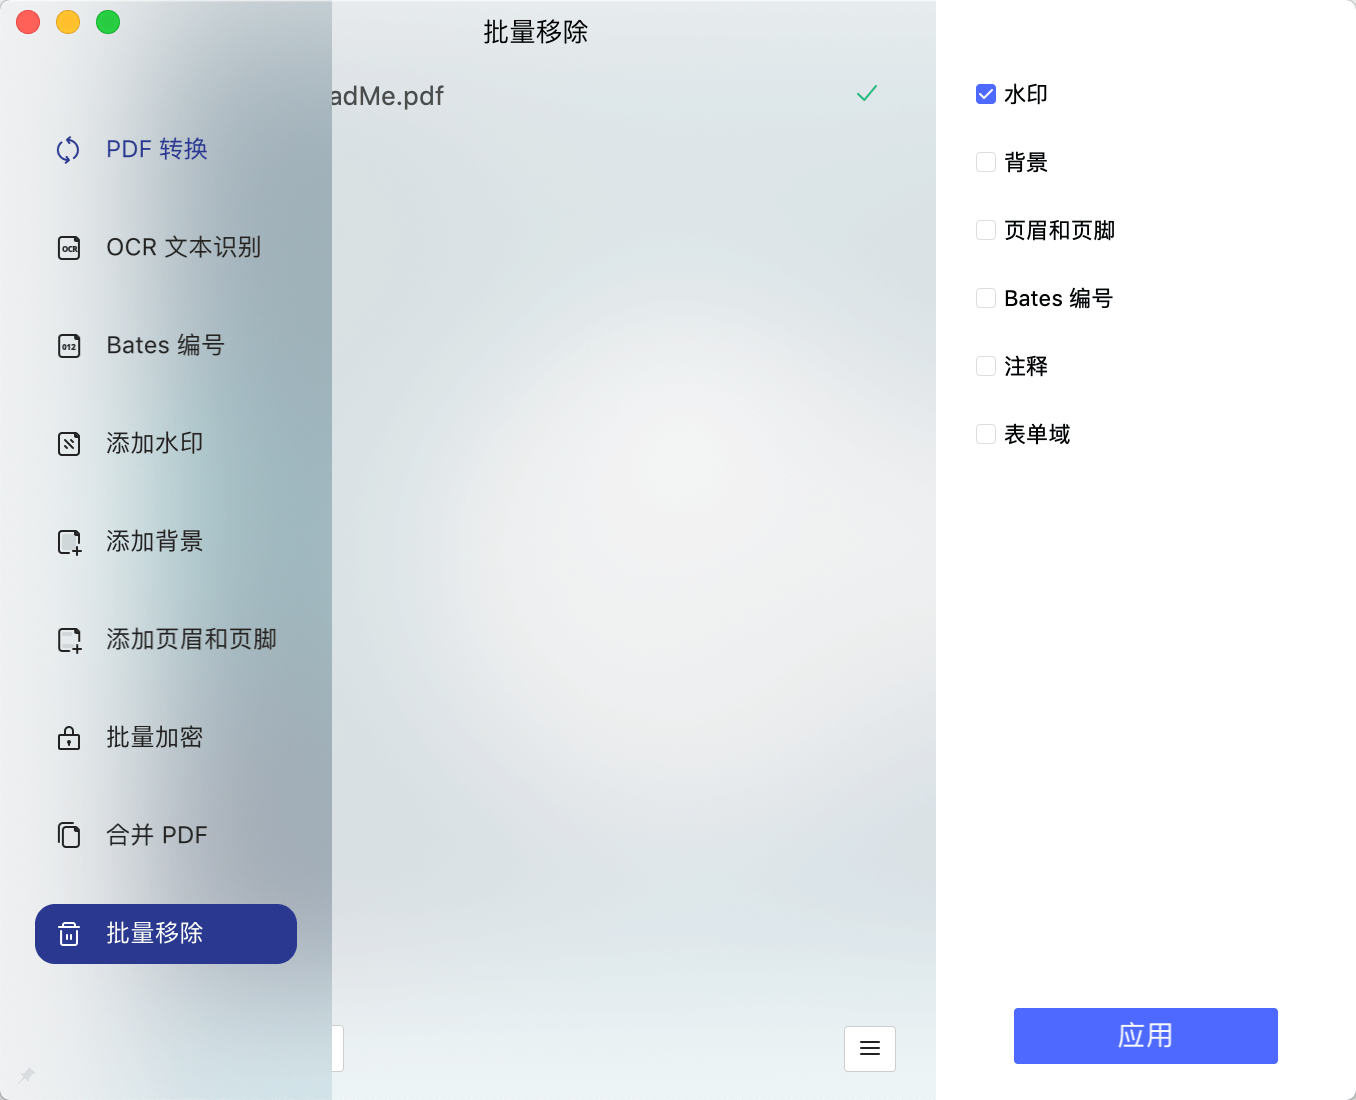 Wondershare PDFelement Pro for mac 8.6.5 OCR中文版